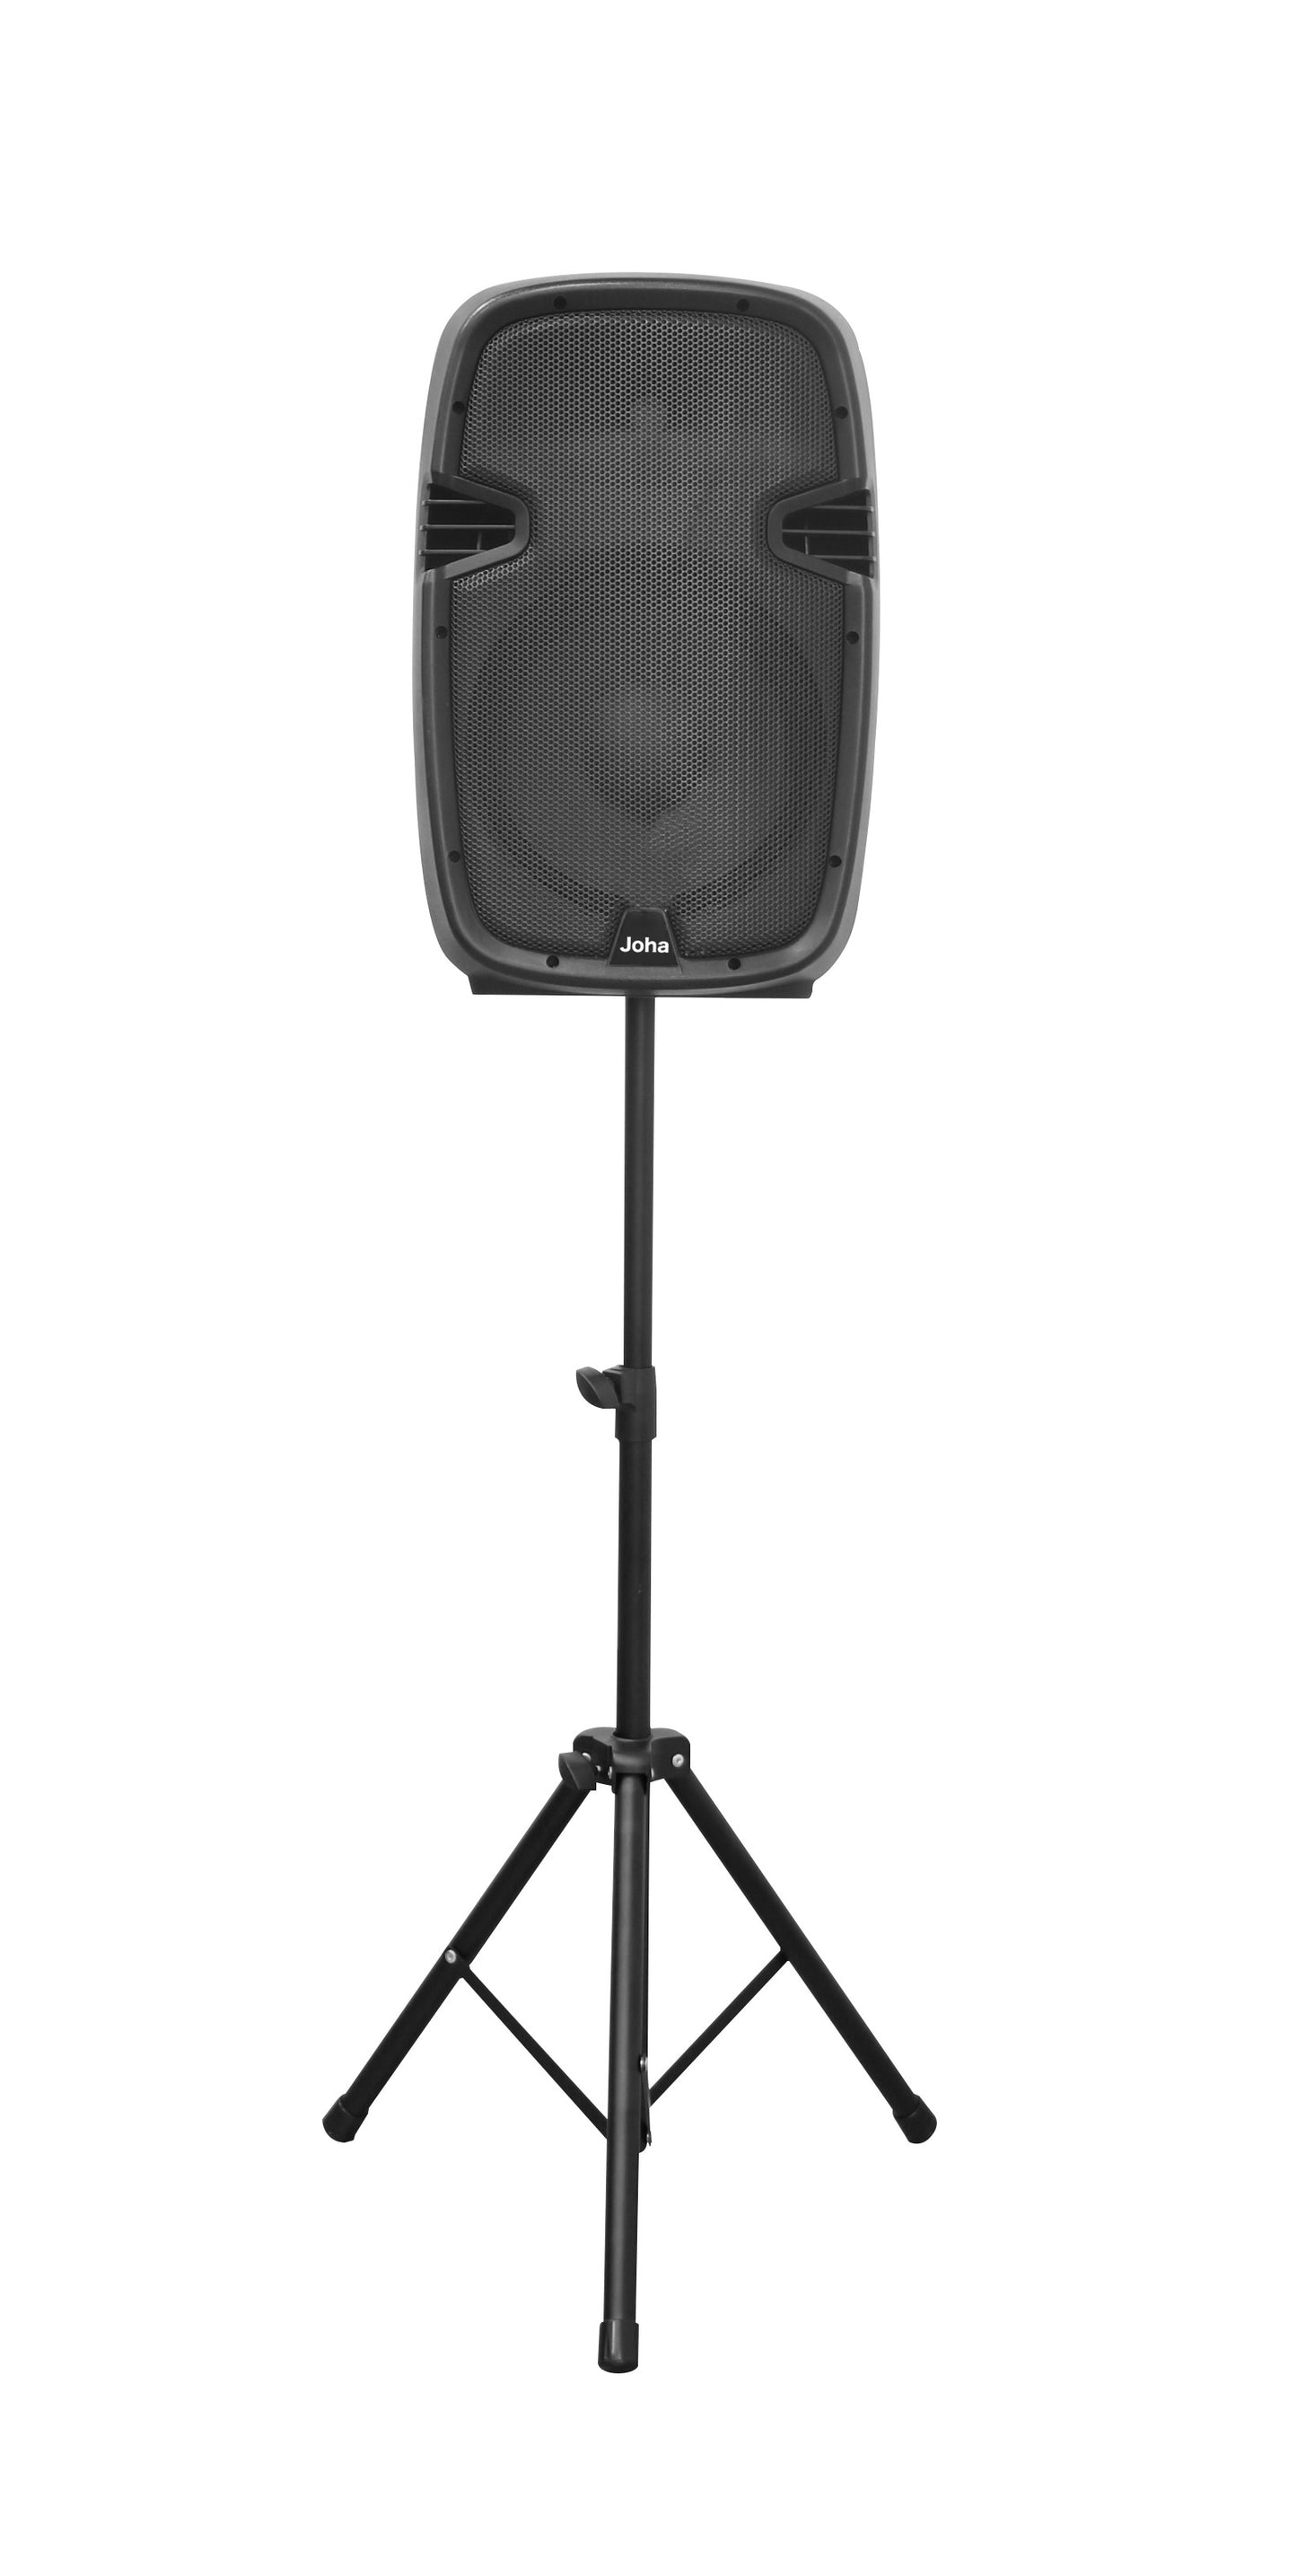 Joha Wireless Speakers (JOHA-2100)